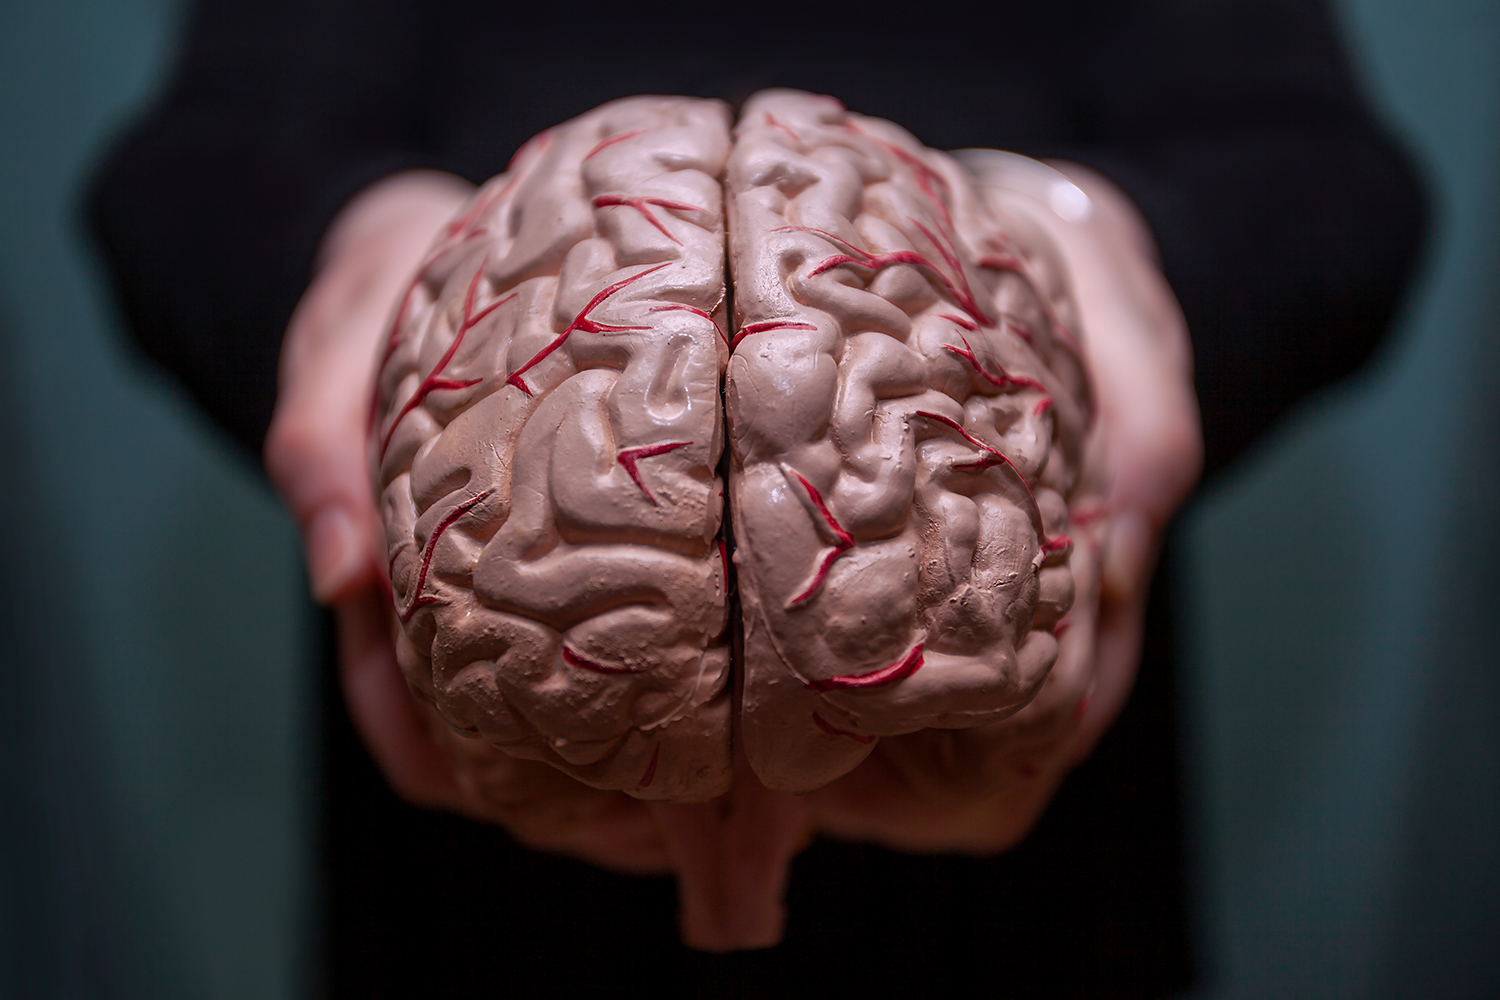 Human brain held in two hands